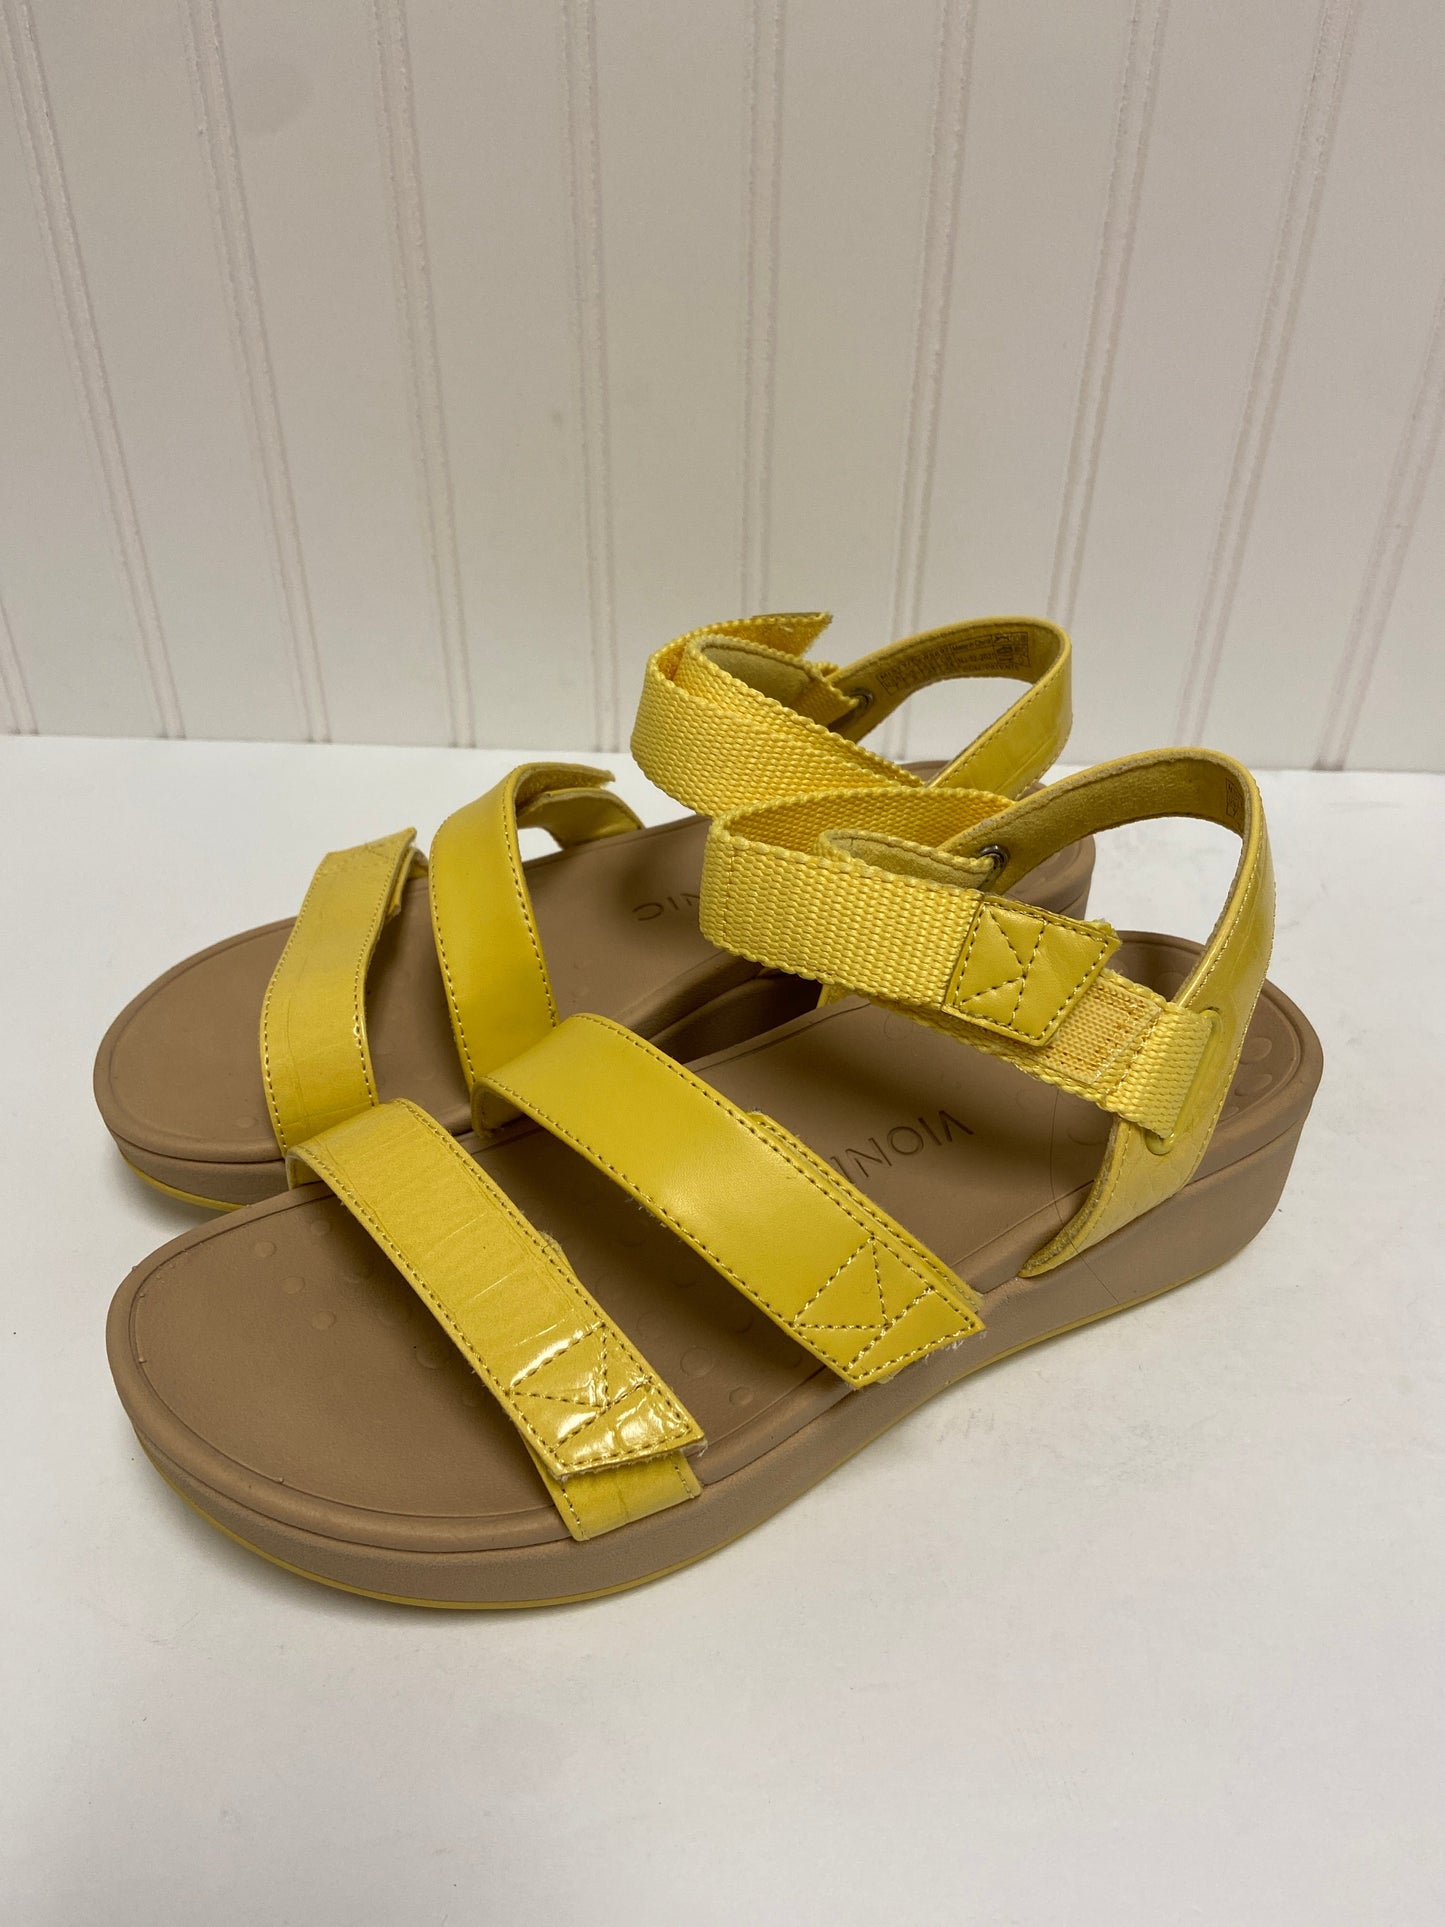 Yellow Sandals Heels Platform Vionic, Size 7